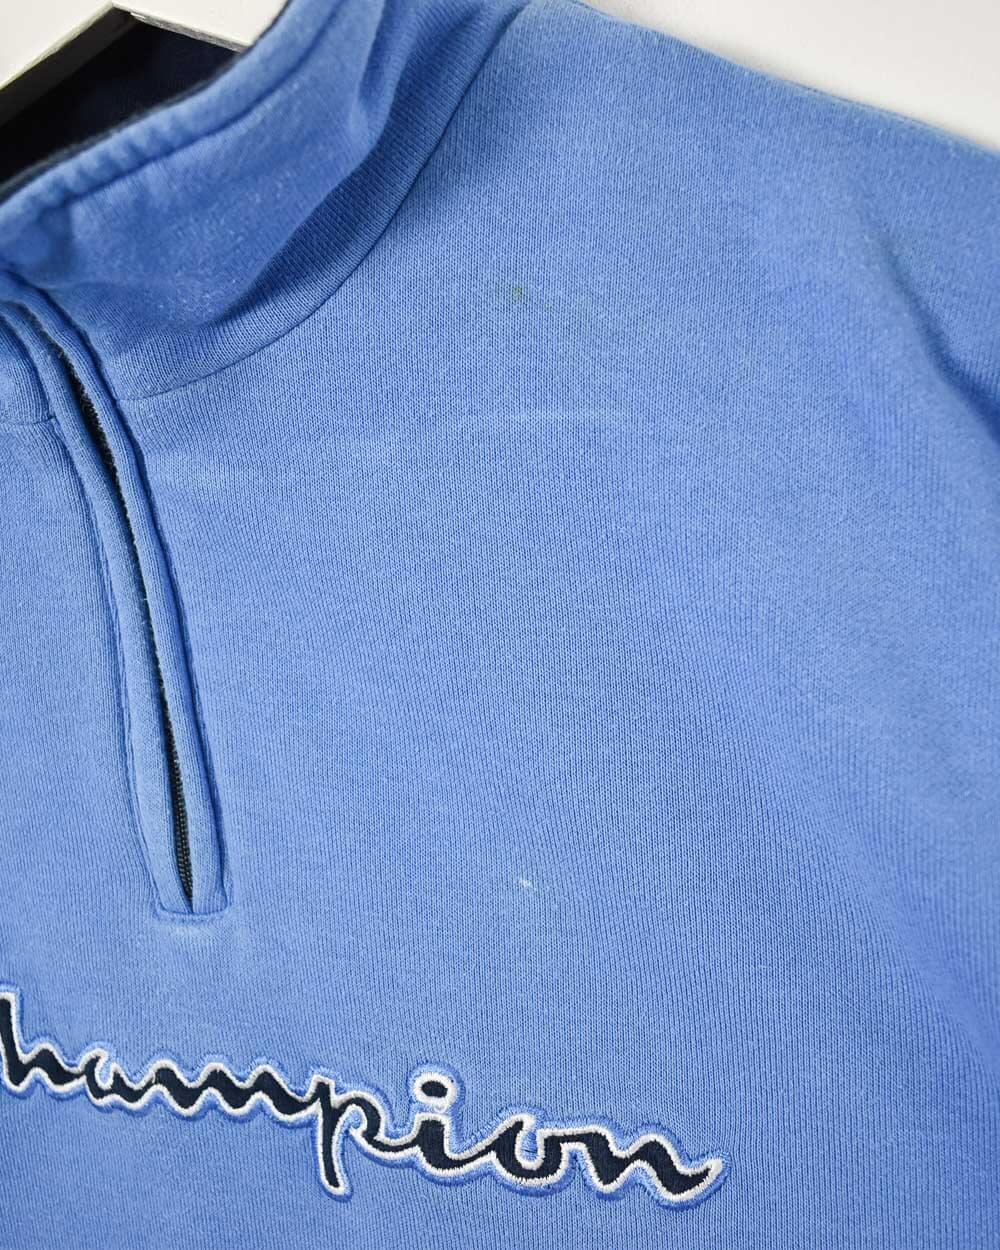 Blue Champion 1/4 Zip Sweatshirt - Small